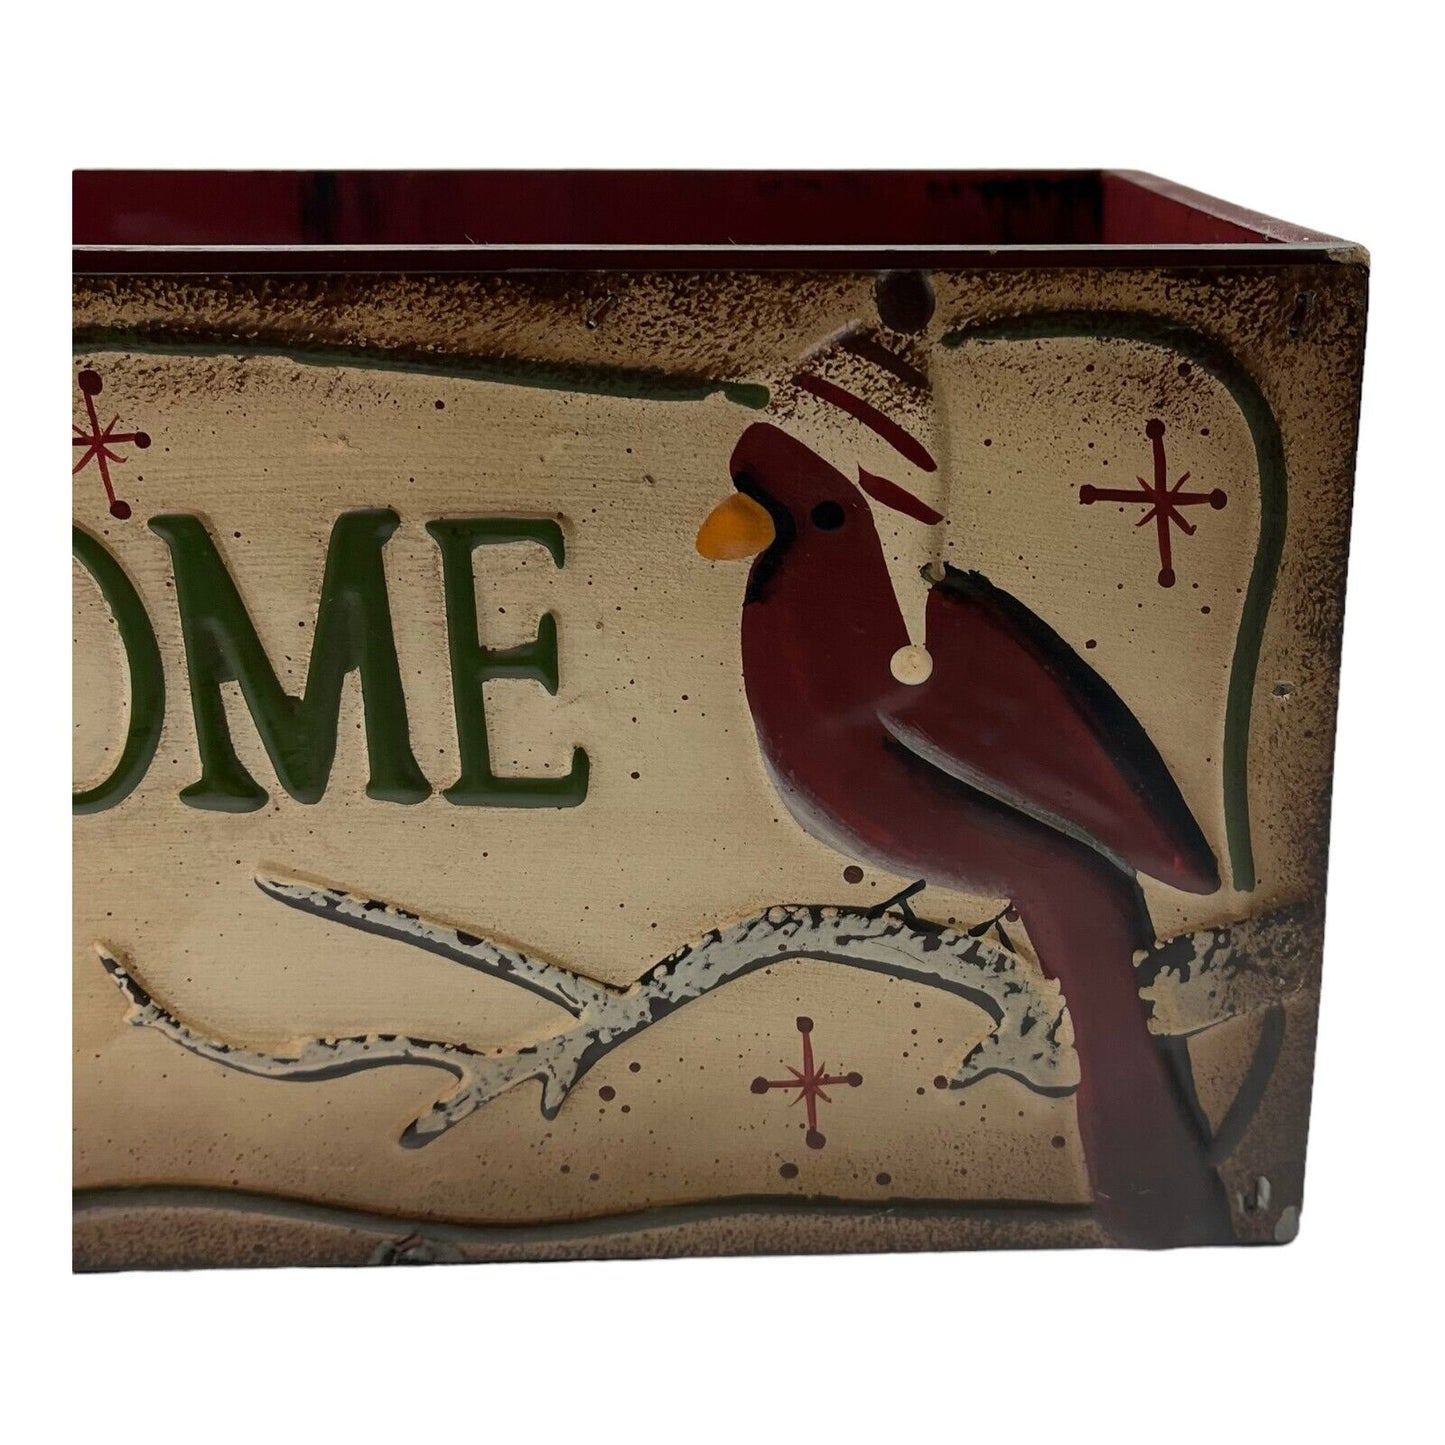 Christmas "Welcome" Cardinal 12" X 7" Wooden Box